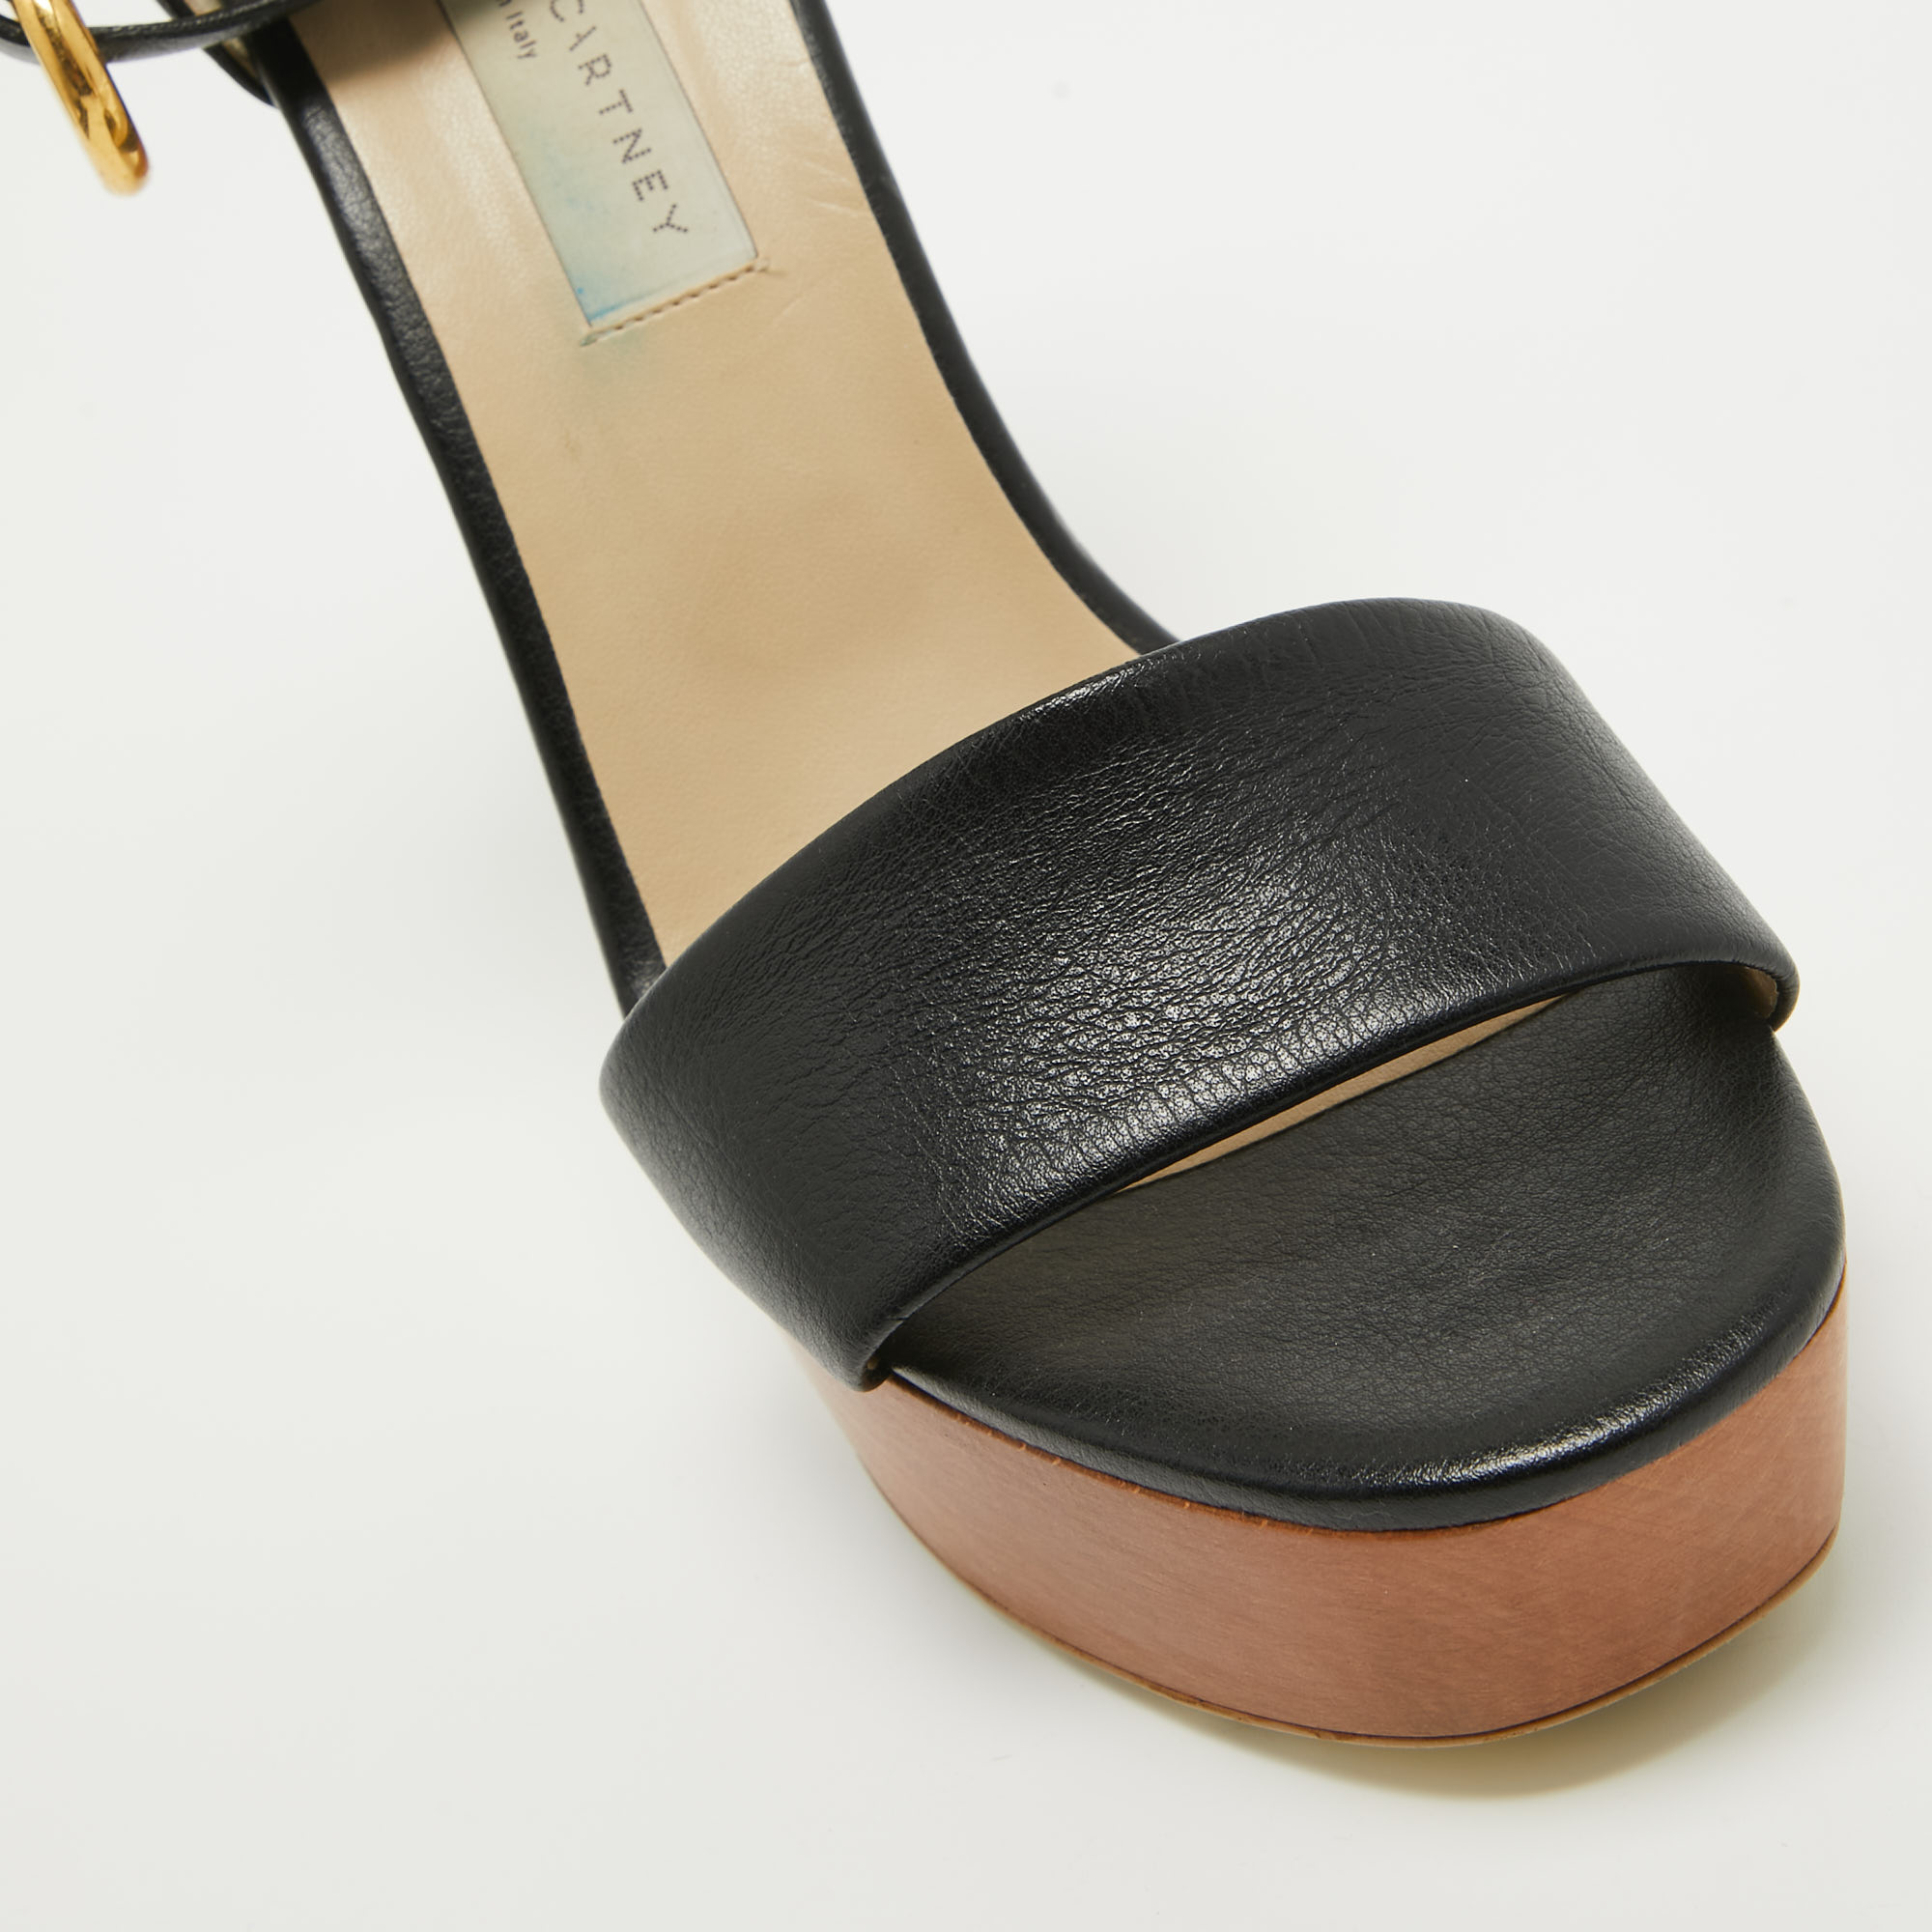 Stella McCartney Black Faux Leather Wooden Platform Ankle Strap Sandals Size 40